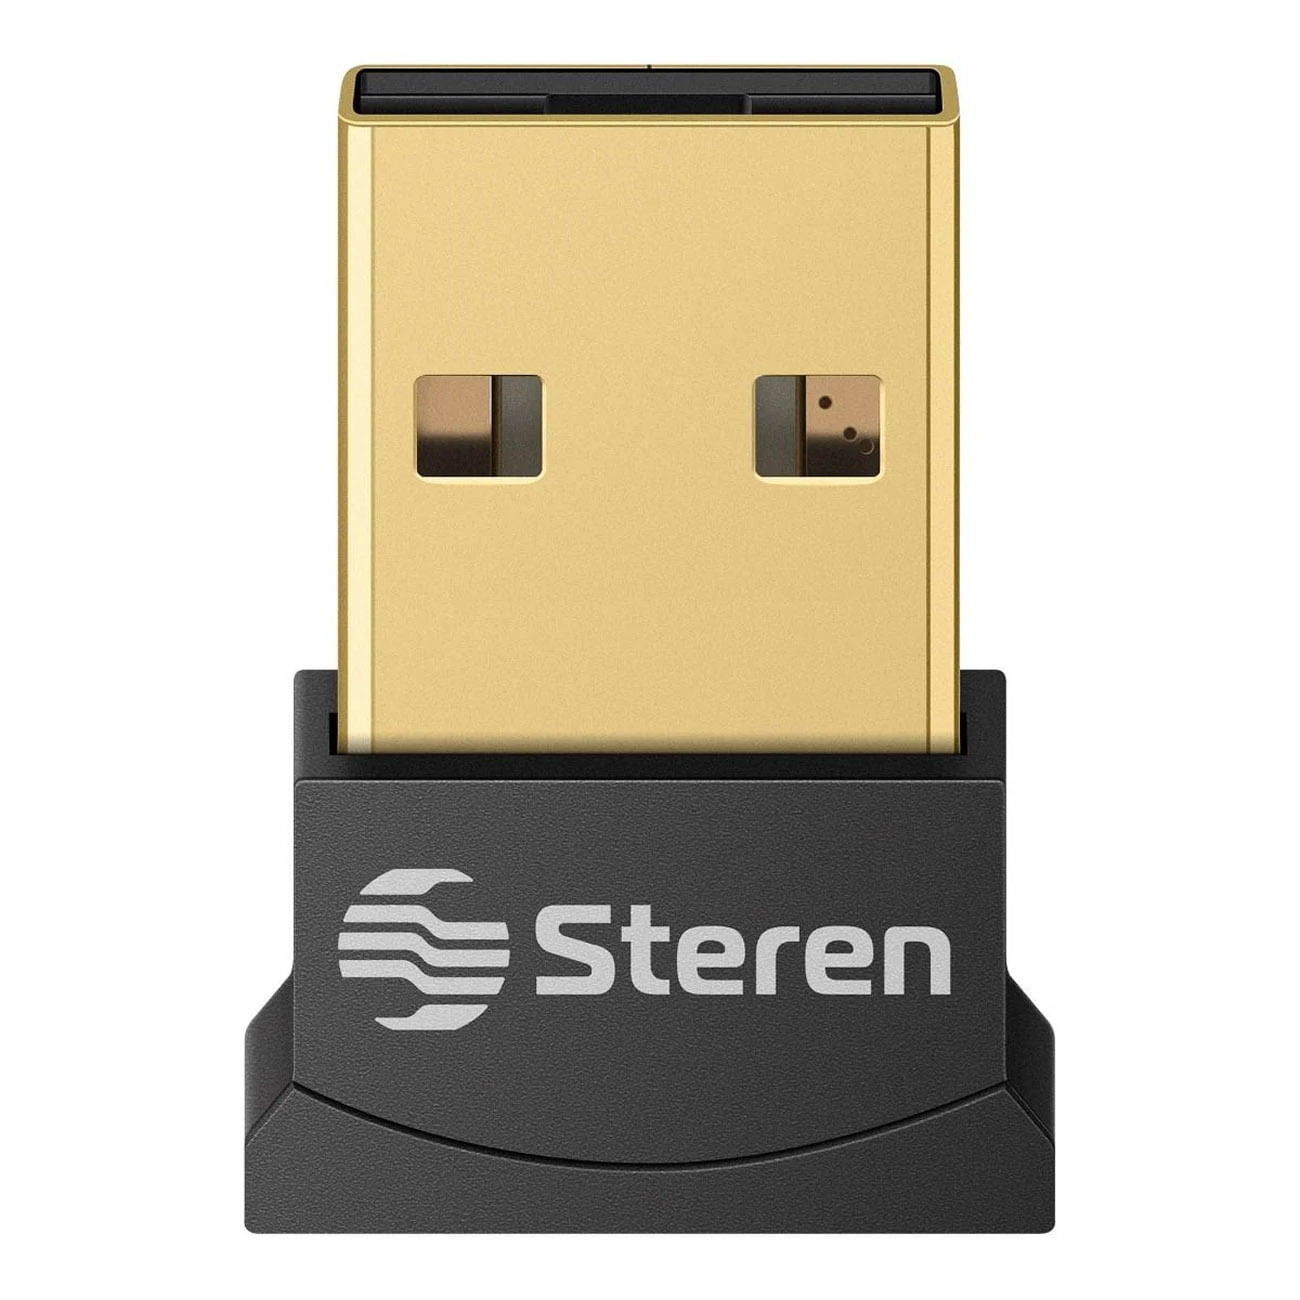 Adaptador Steren COM-206 USB a Bluetooth